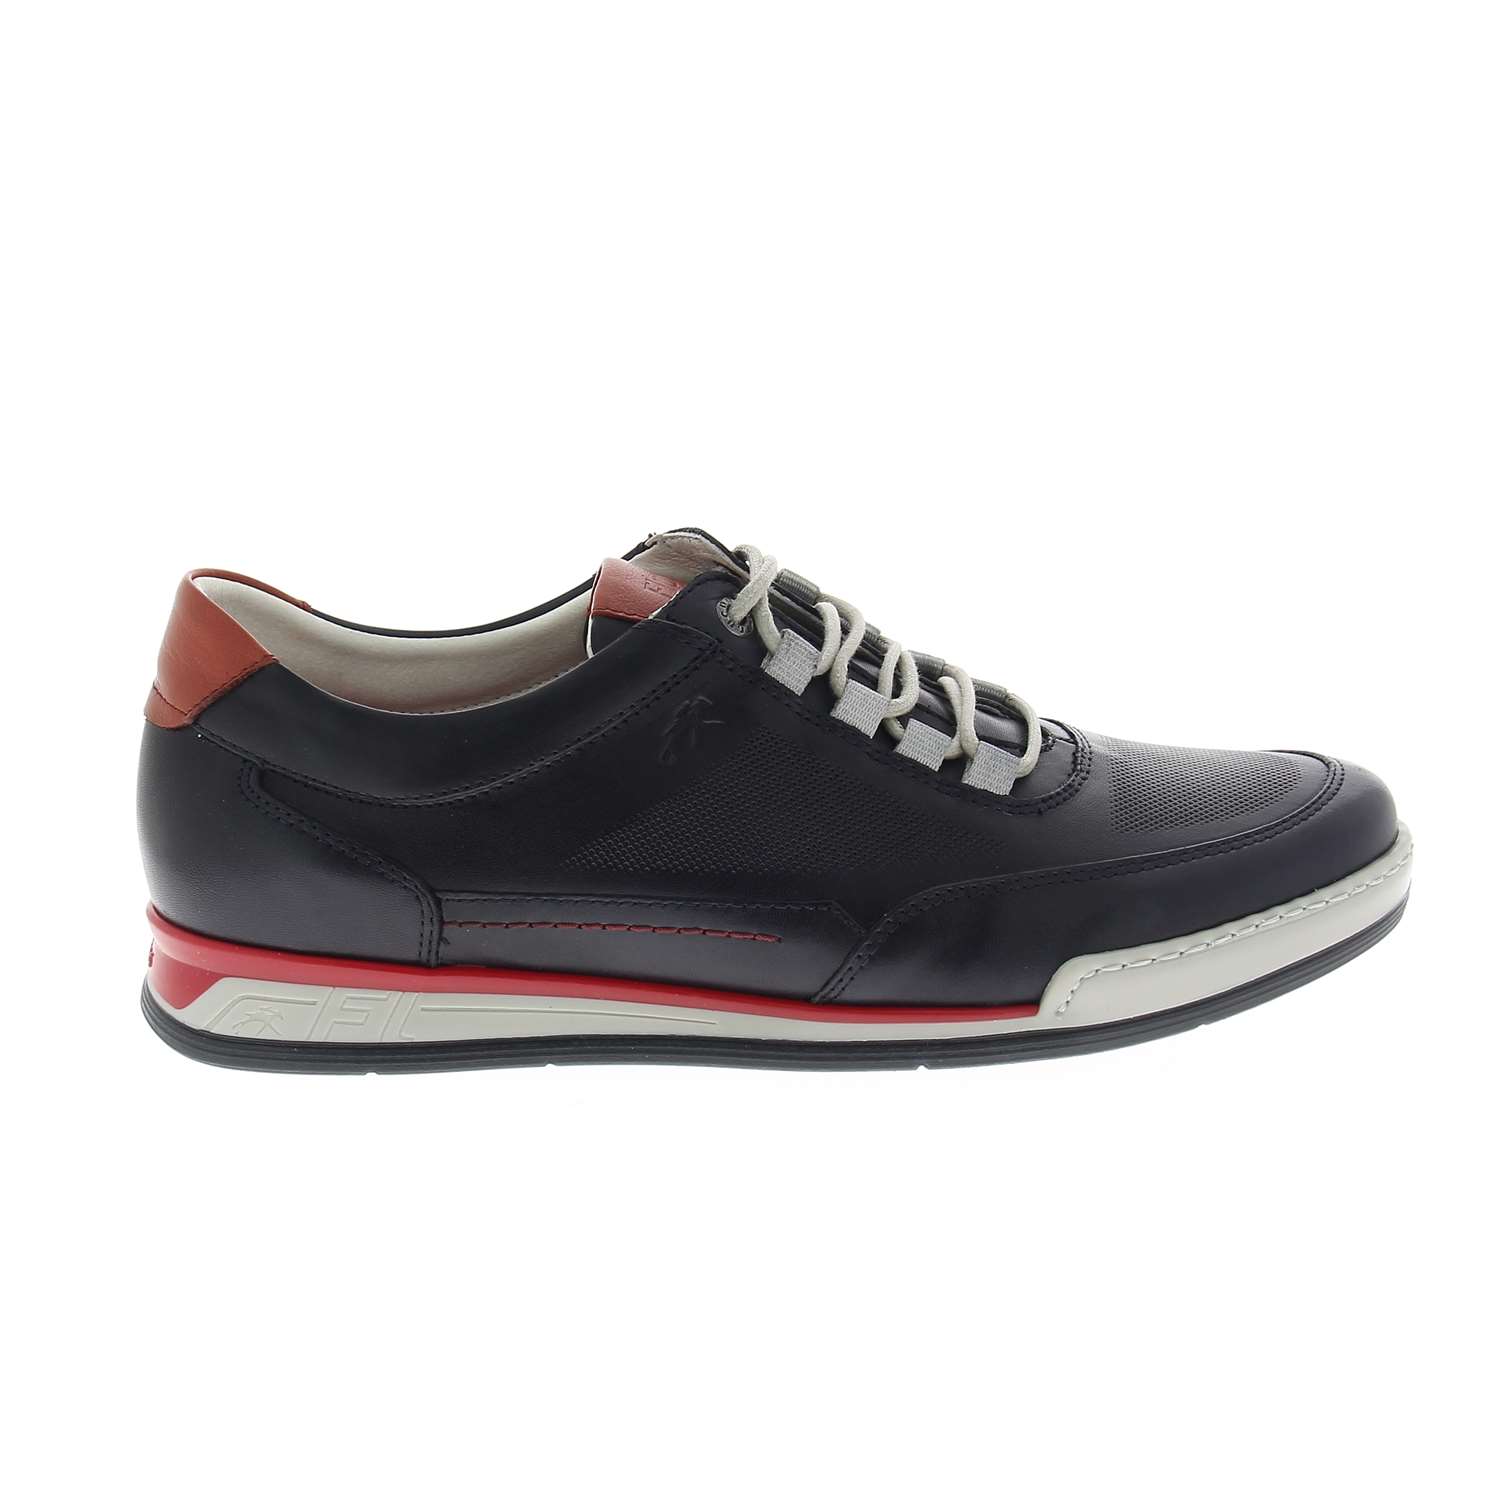 02 - FLUGHILLY - FLUCHOS - Chaussures à lacets - Cuir